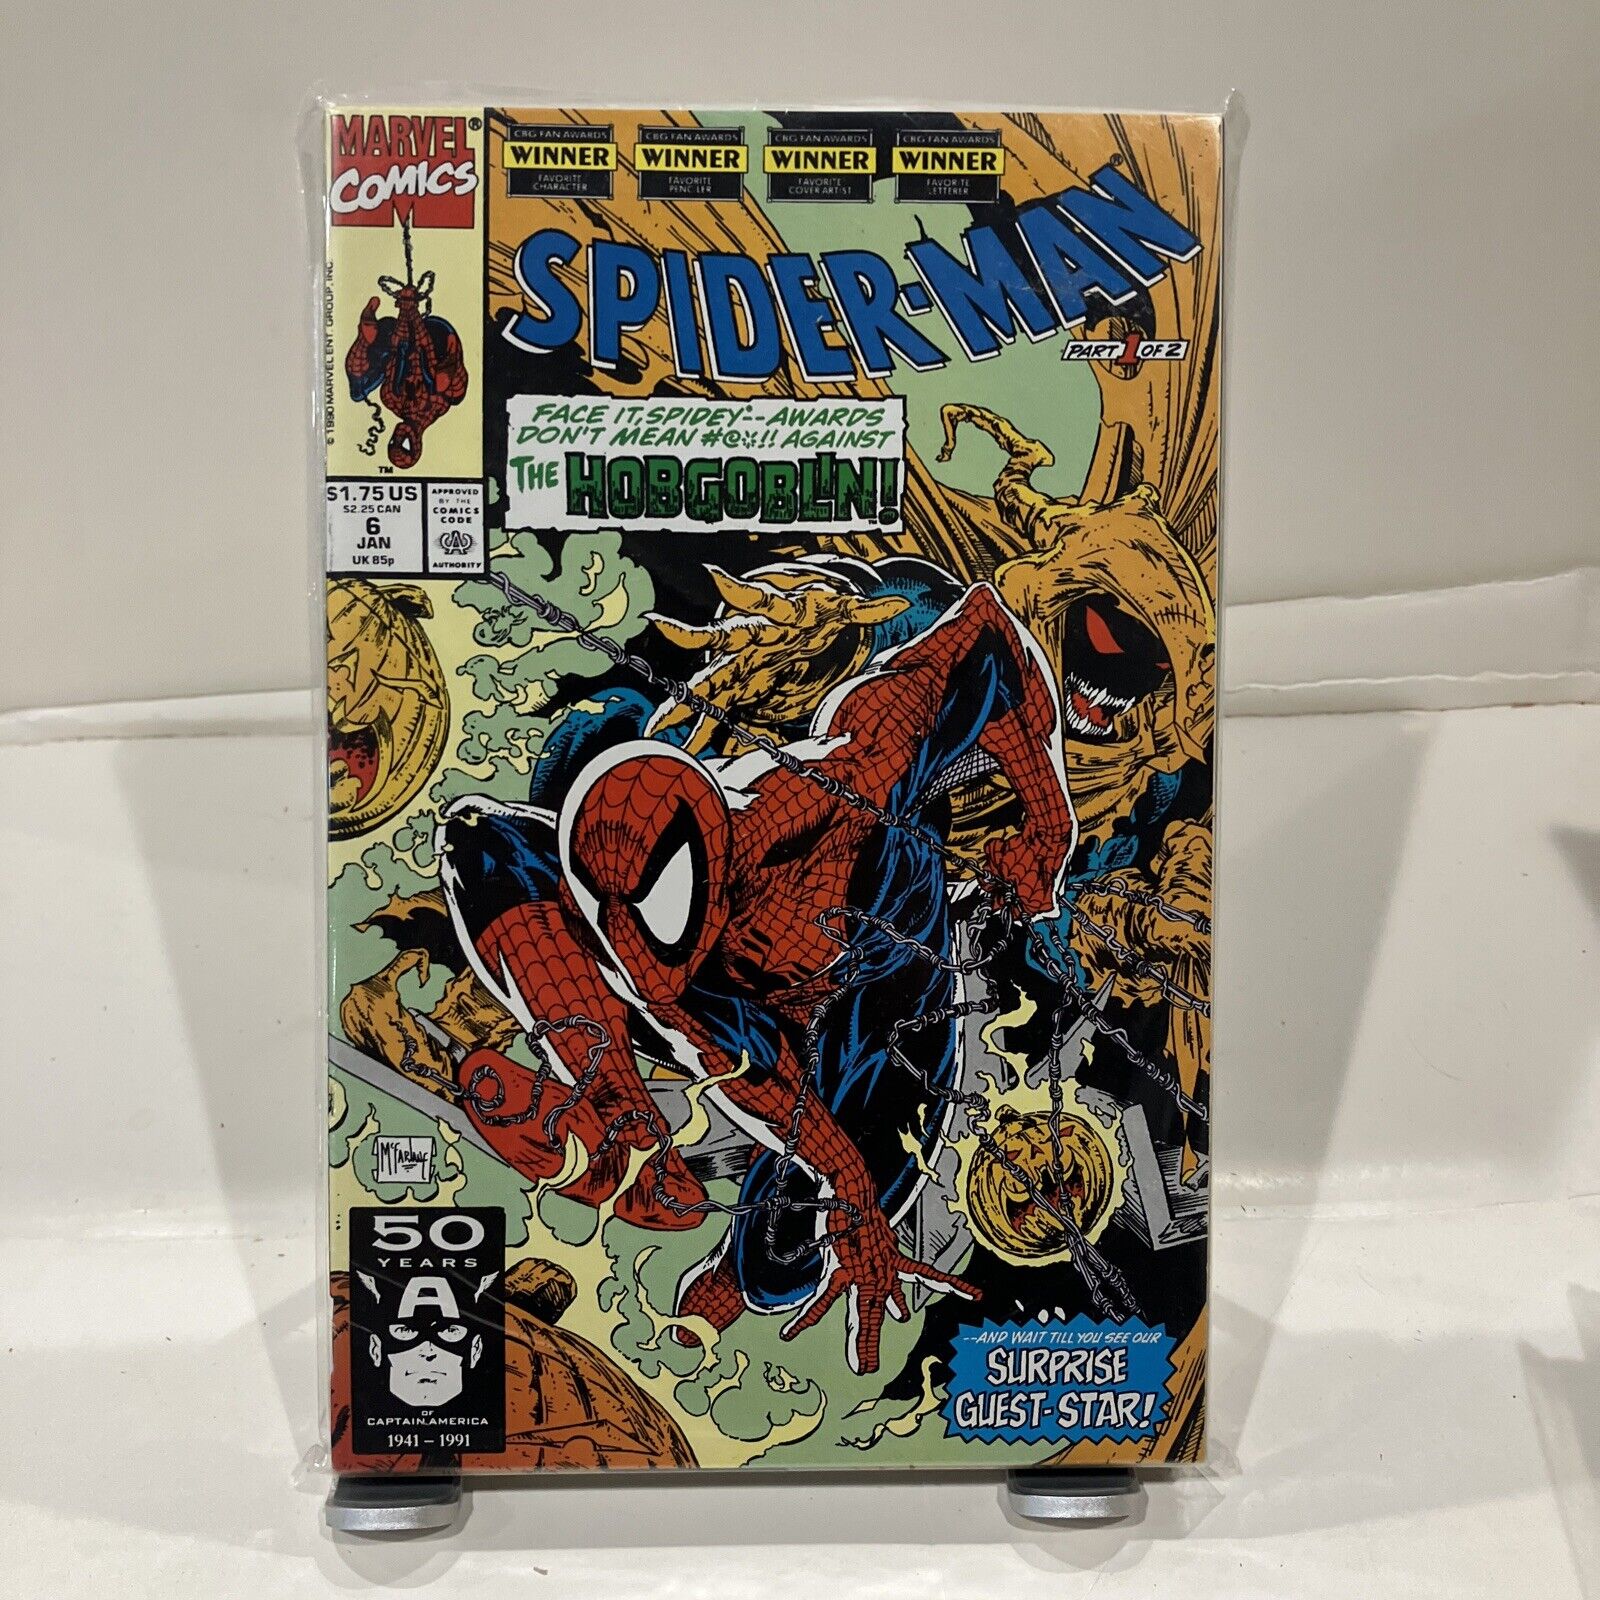 Spider-Man #6 (Marvel, January 1991)